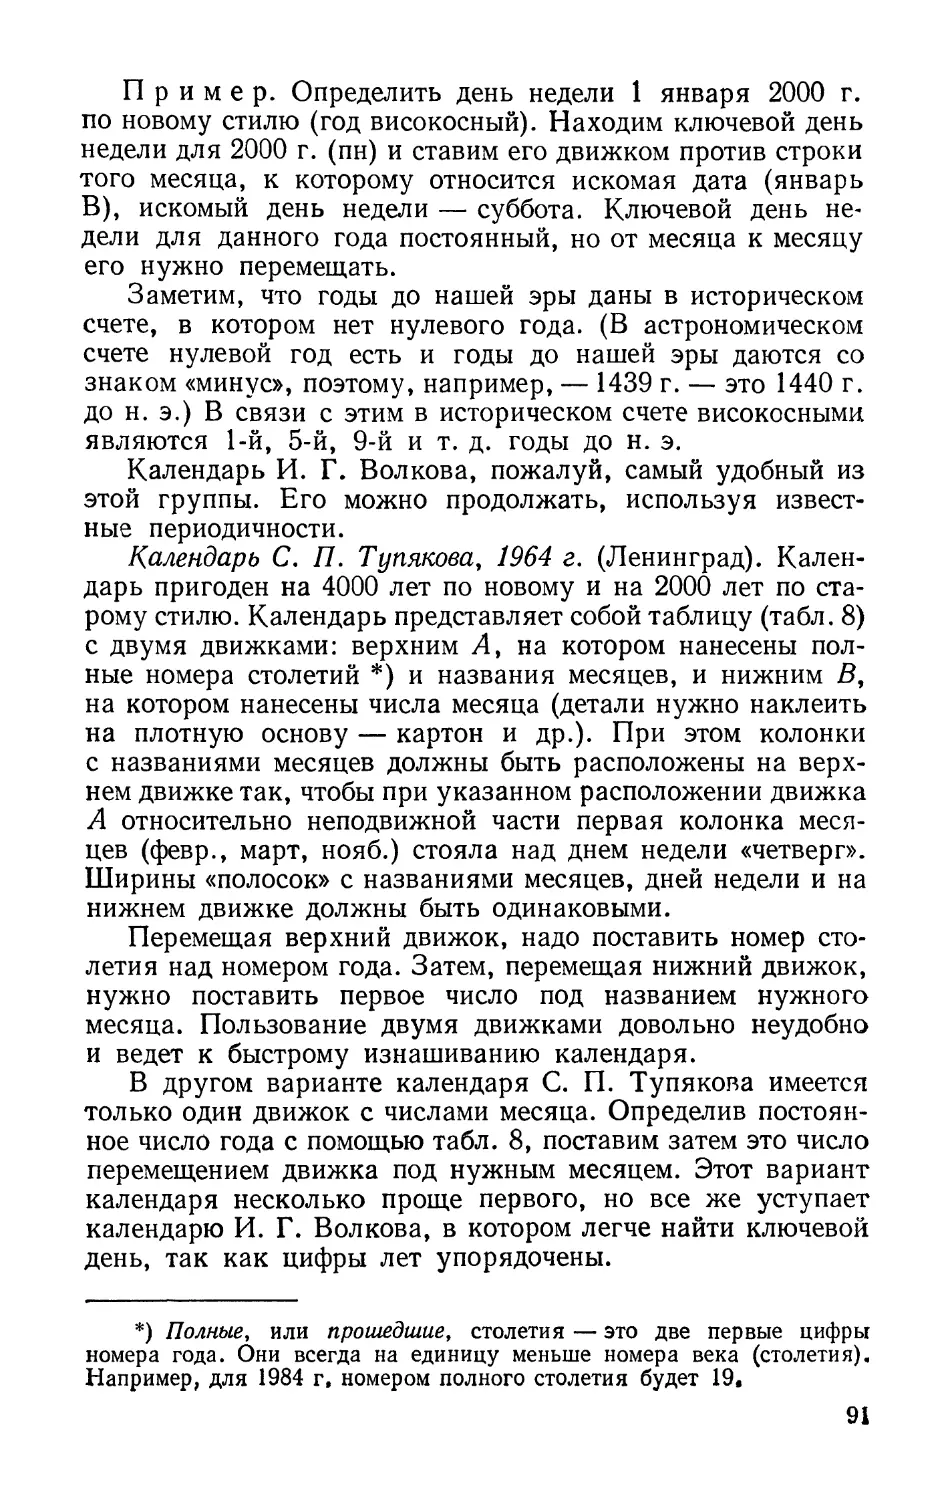 Календарь С. П. Тупякова, 1964 г.